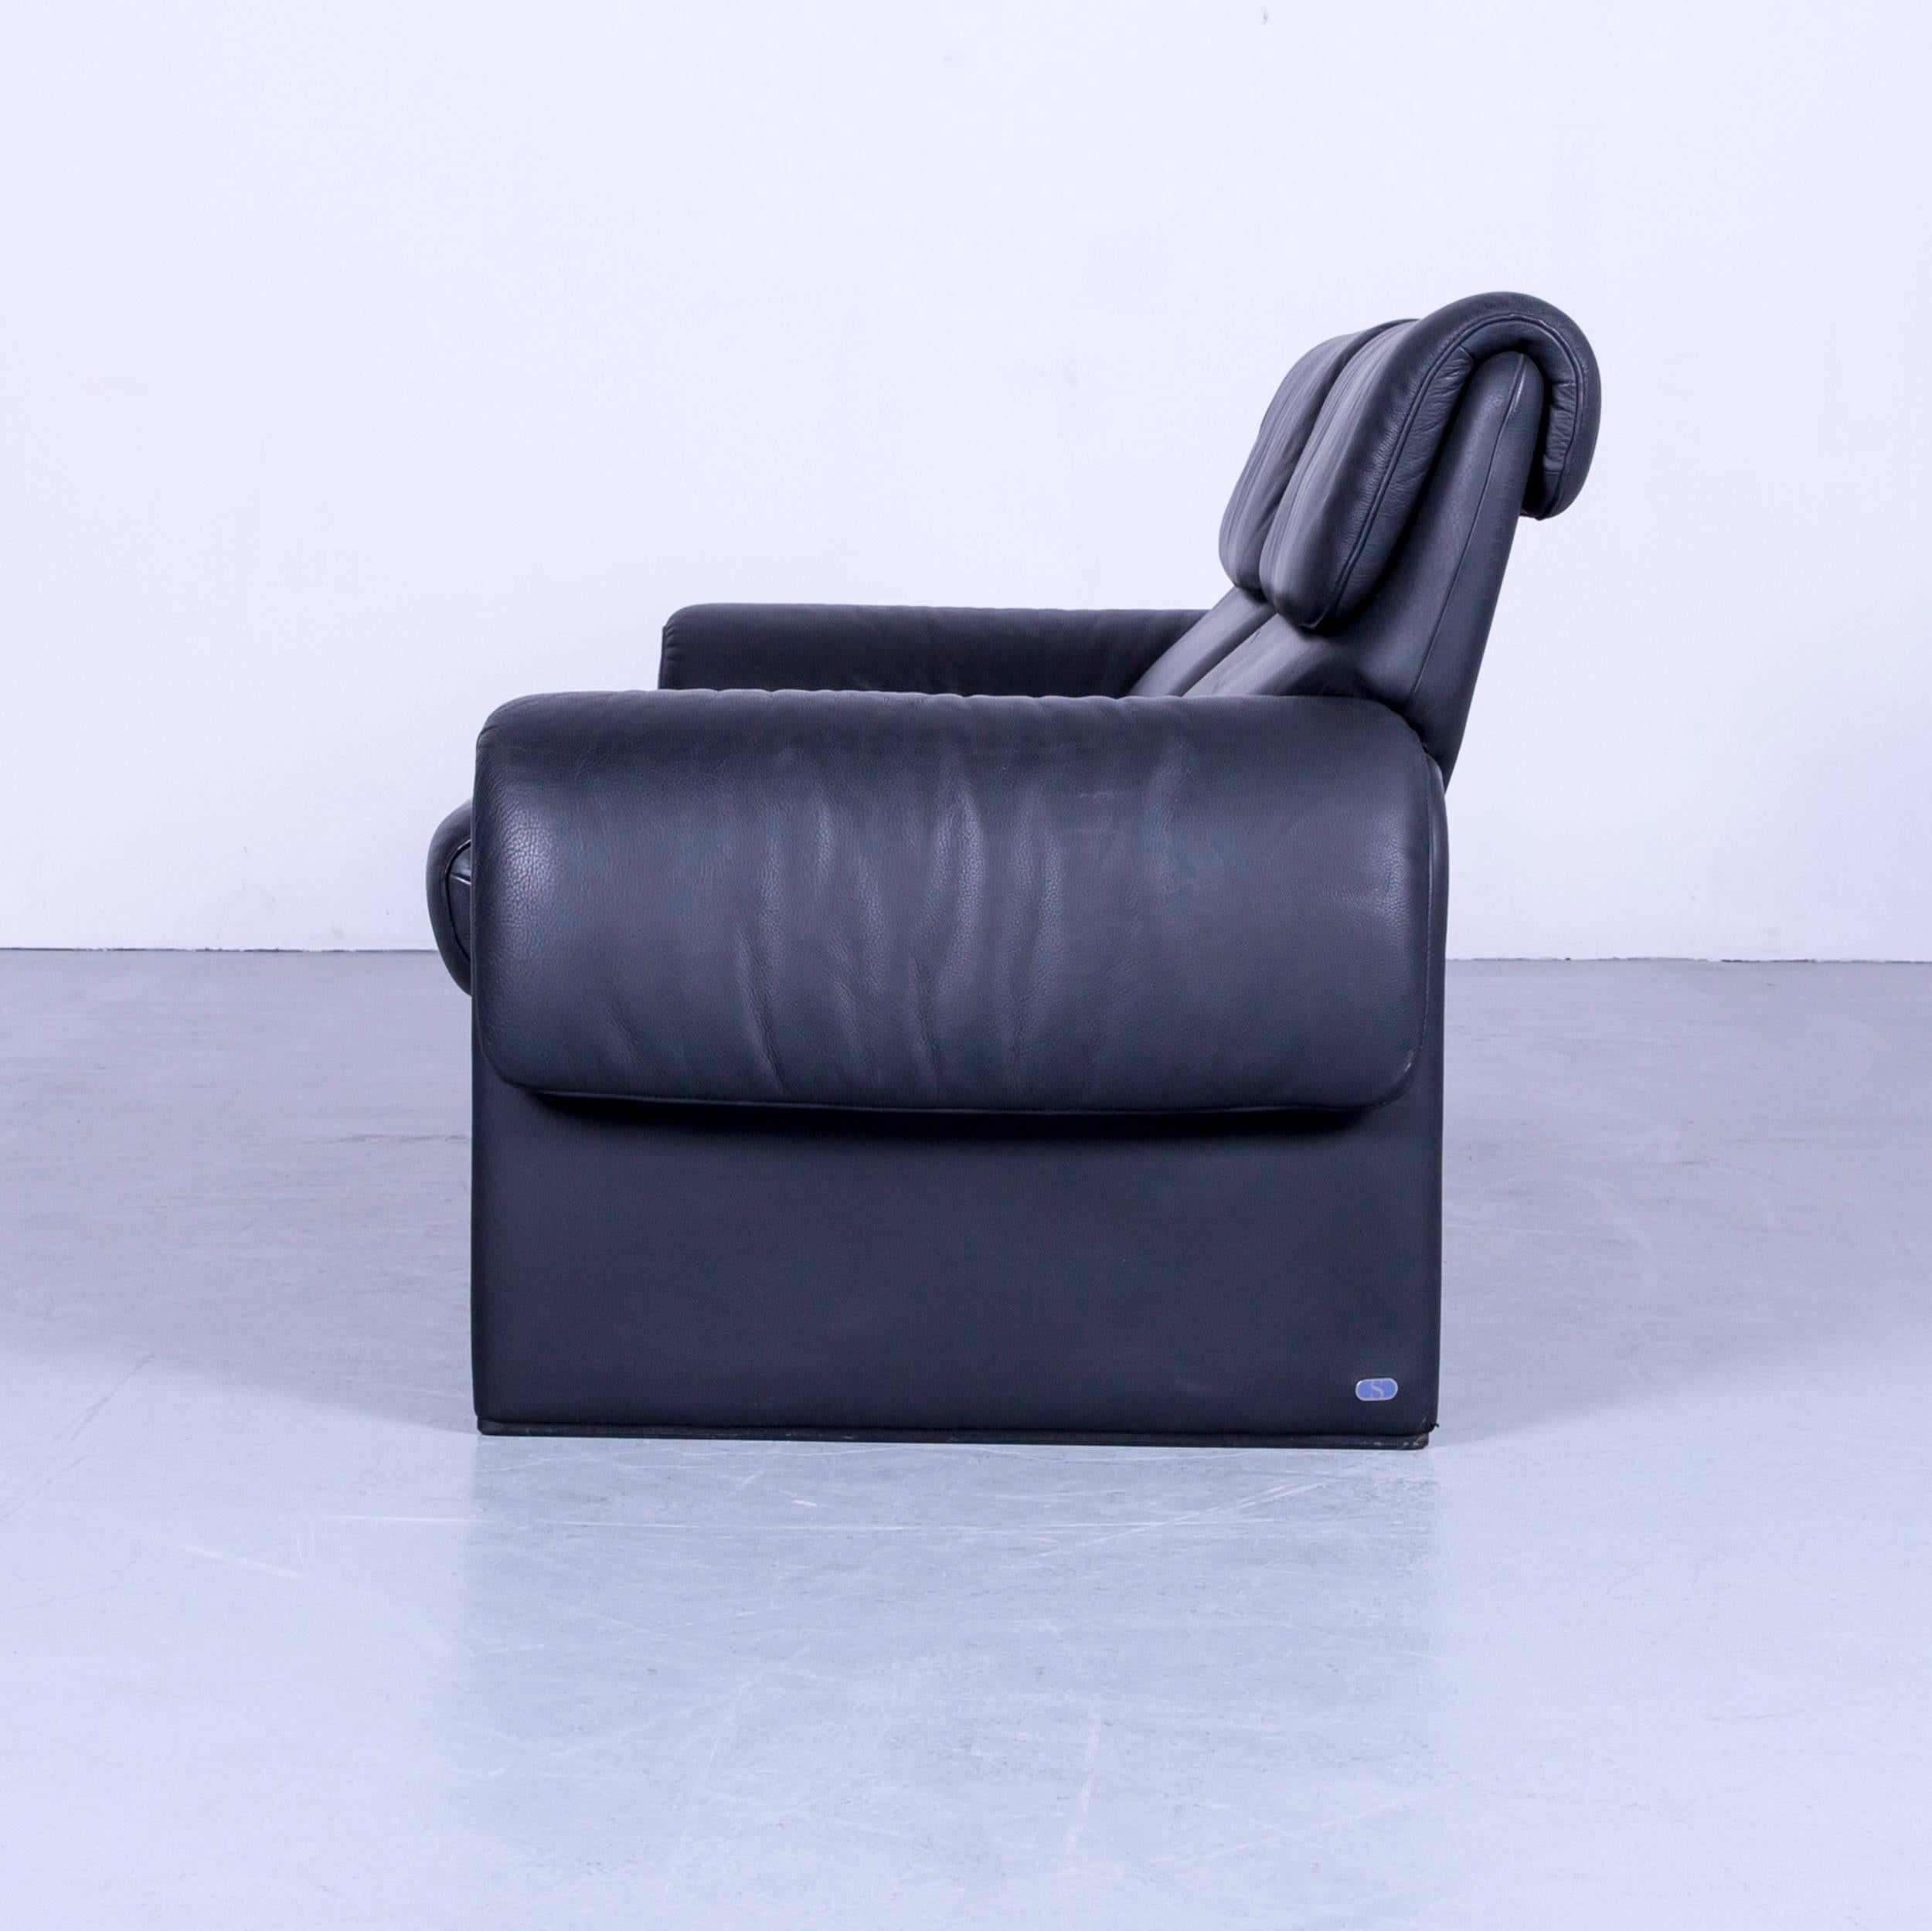 De Sede DS 2000 Designer Sofa Black Leather Relax Function Couch Switzerland 8